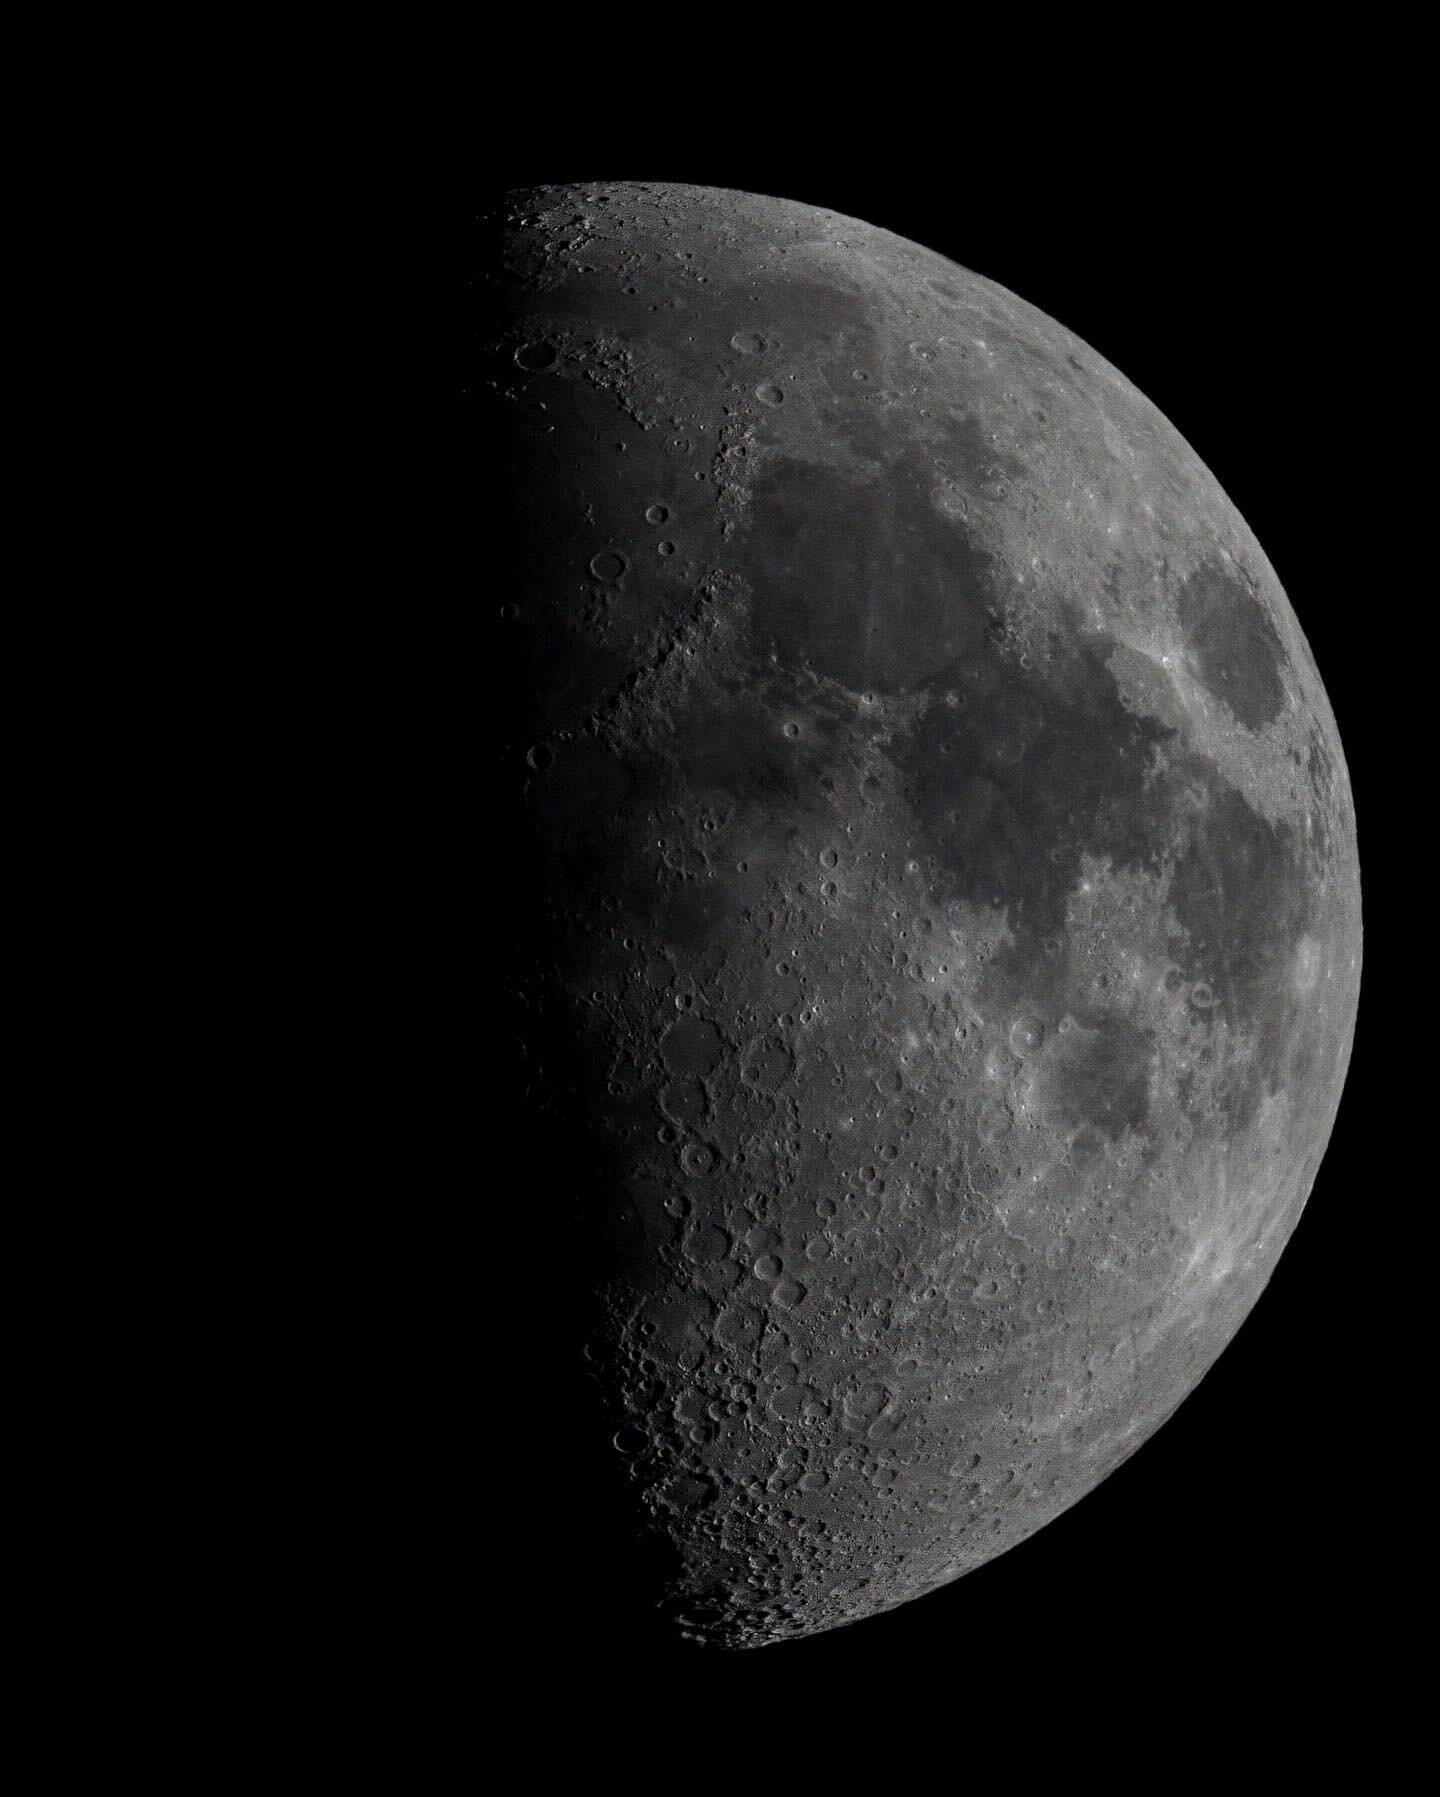 🌓✨👑
.
.
.
.
.
.
.
.
.
.
.
.
.
.
.
#moon #moonlove #plan&egrave;te #moonwalk #starphotography #sonyalph #nightsky #universetoday #astrophoto  #nightscaper #astronomia #astro_photography #moonphoto #selenophile #astrofotografia #moonphotography #astr